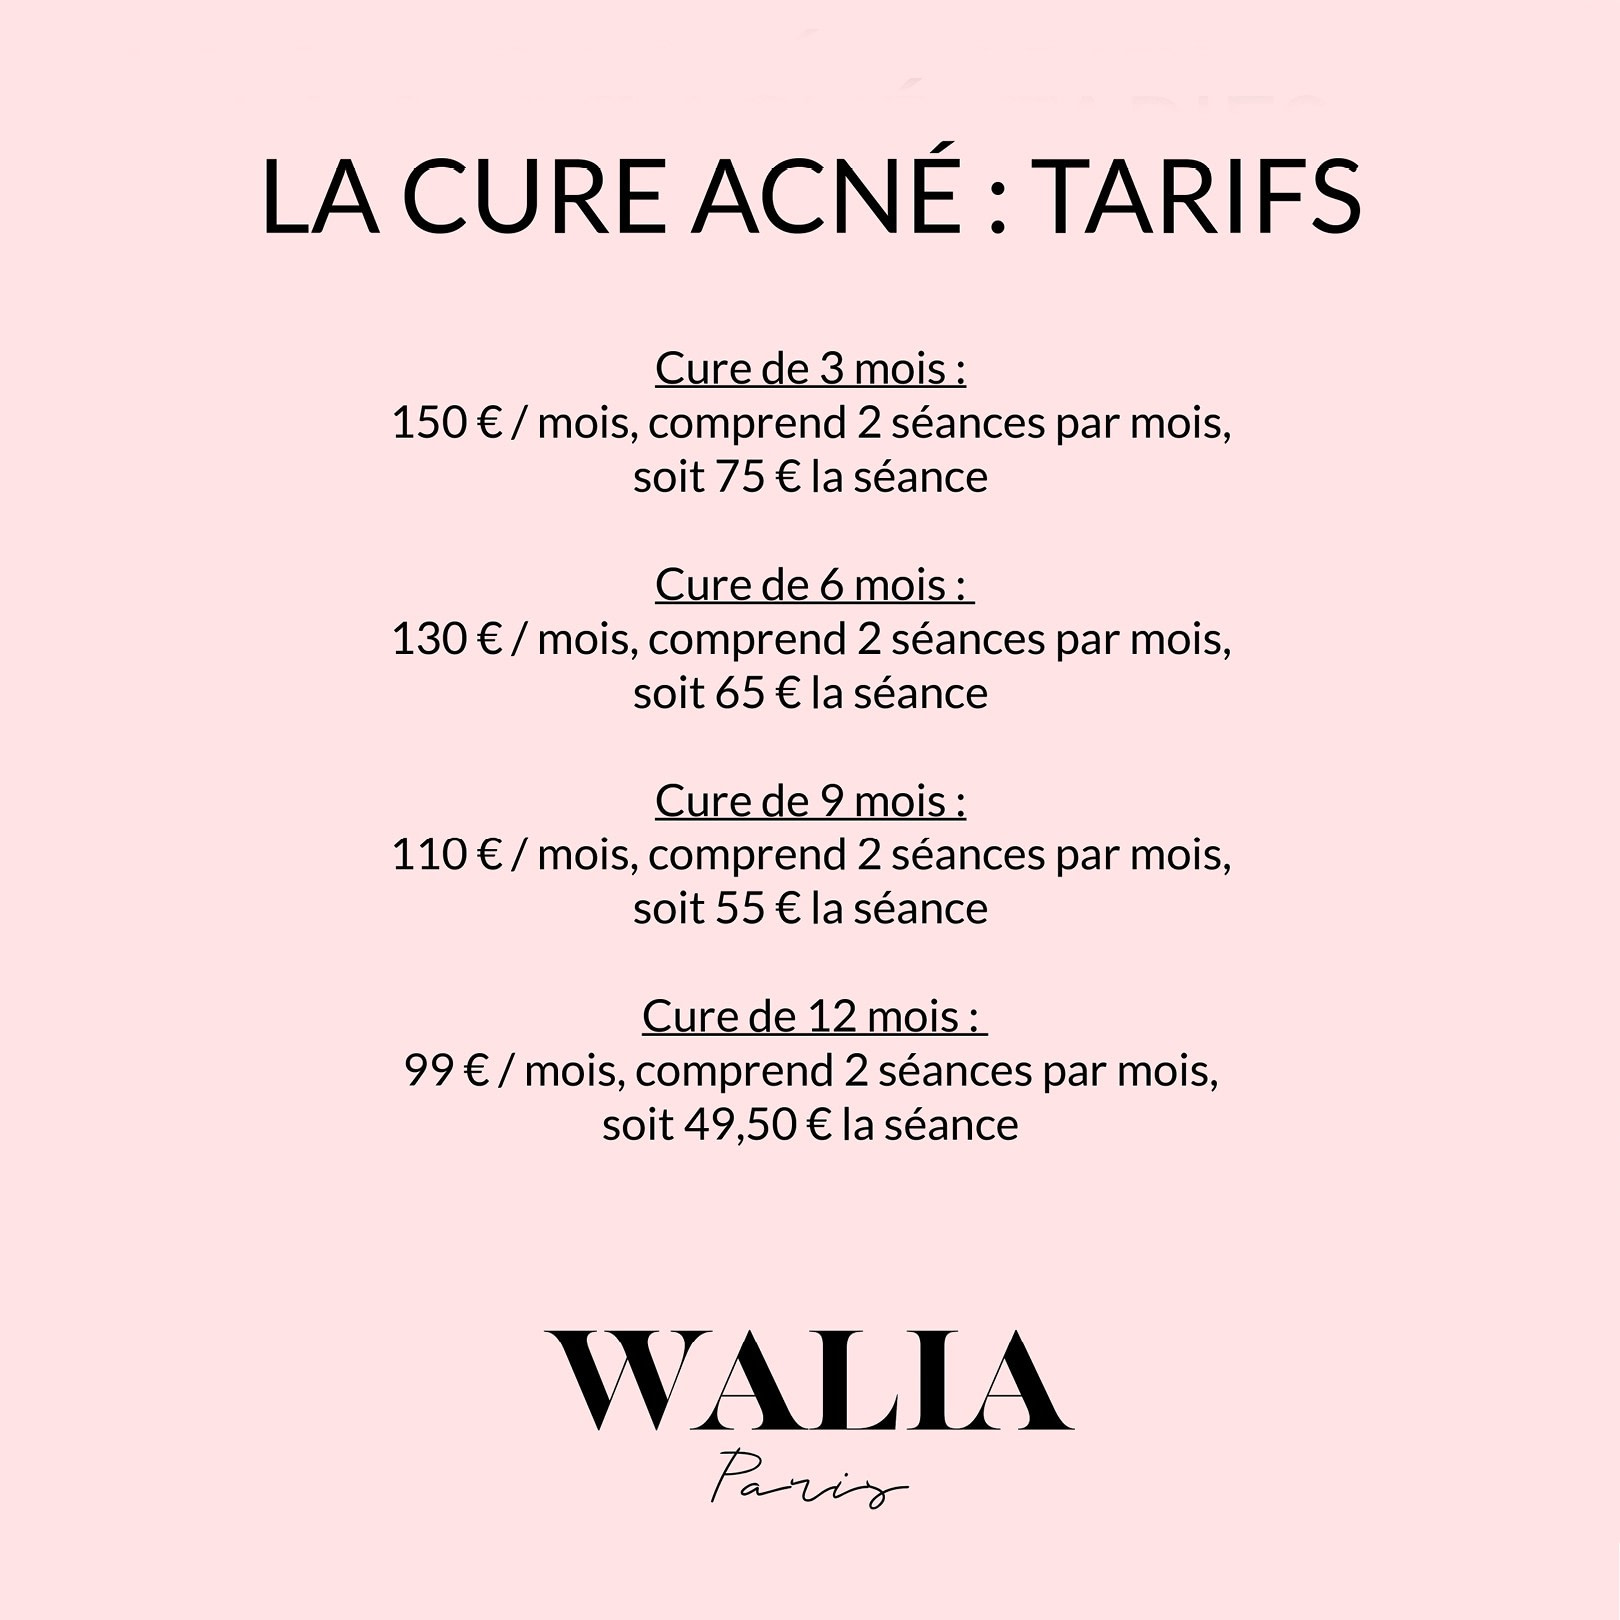 plate-ou-gazeuse-creations-walia-paris-acne-cure-tarifs@2x